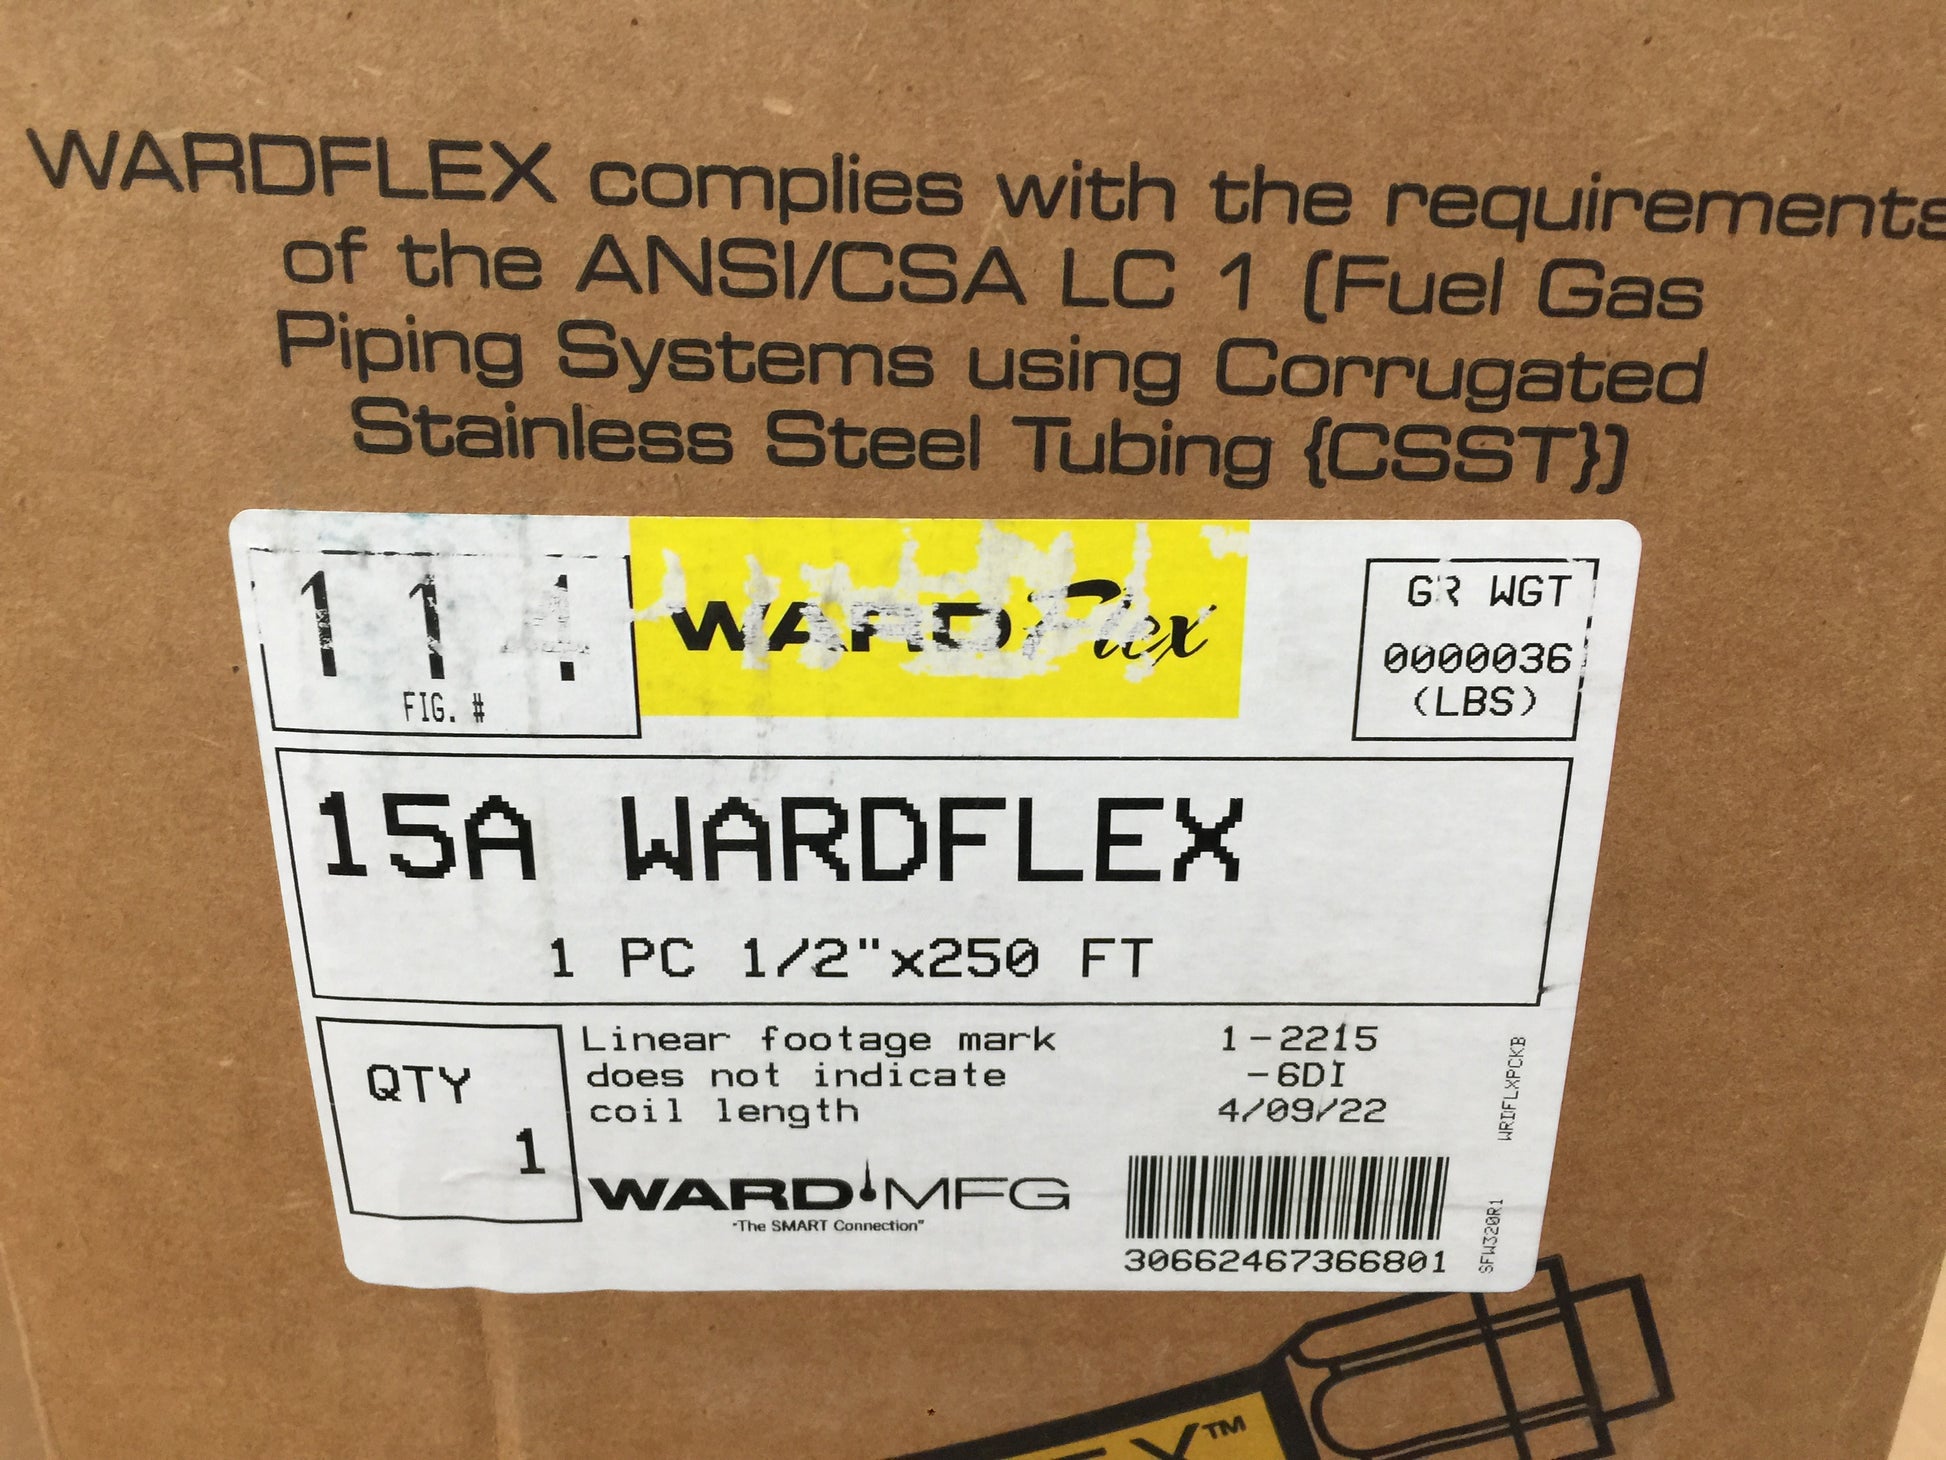 1/2" X 250' "WARDFLEX" FLEXIBLE CORRUGATED STAINLESS STEEL GAS LINE